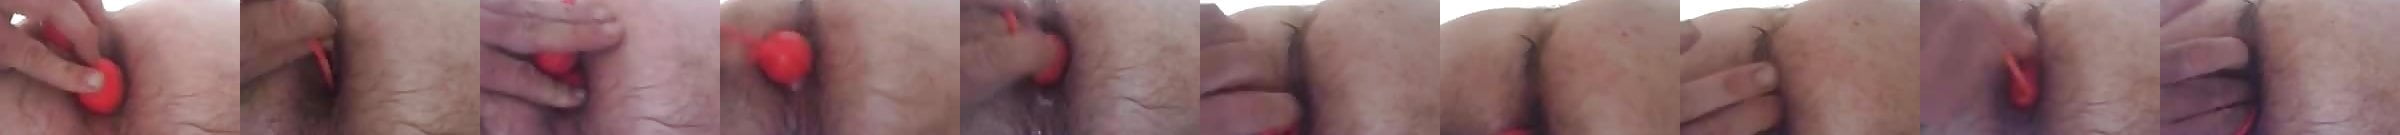 Gay Massage Porn Videos 新着 ページ 33